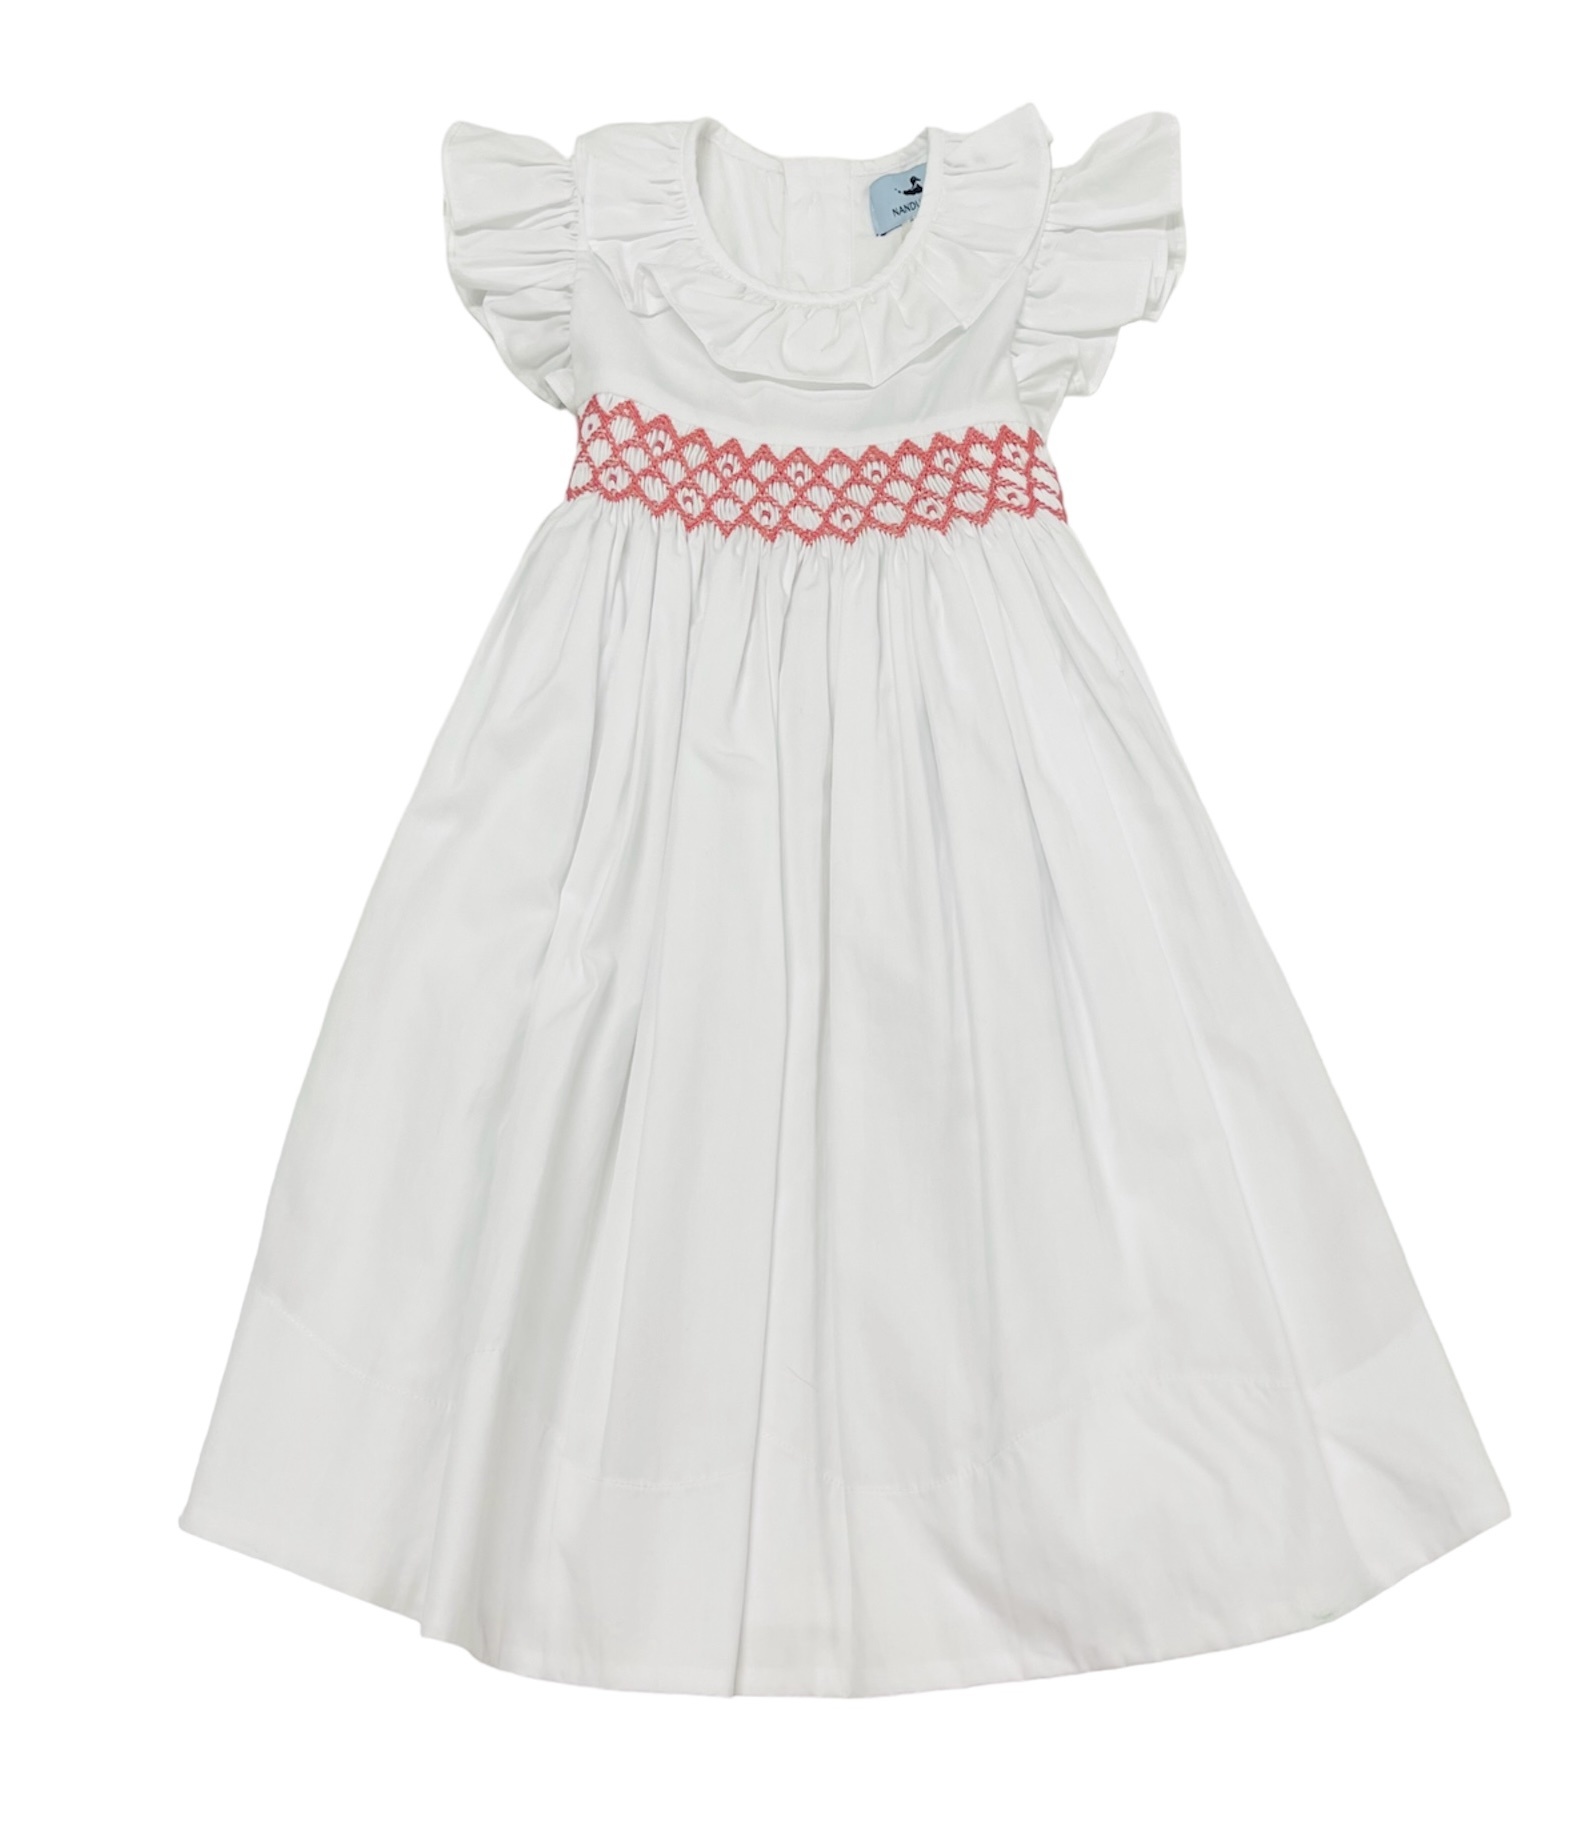 Nanducket White/Coral Sarah Sloane Dress